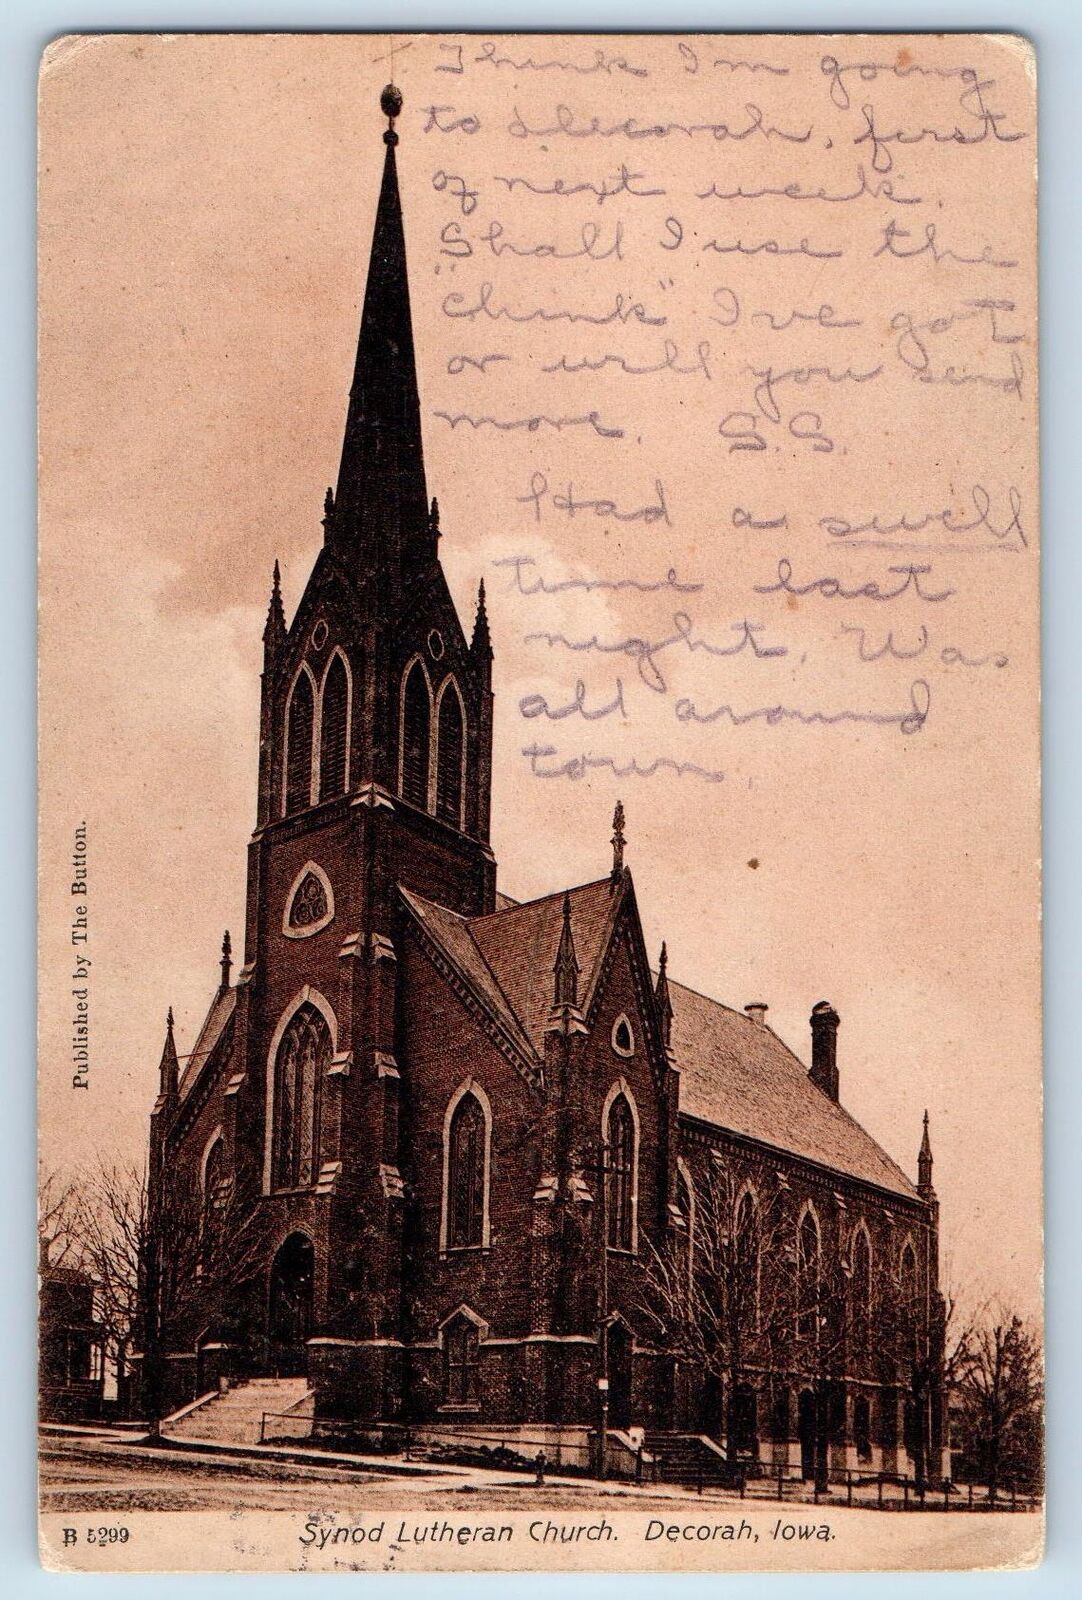 1908 Synod Lutheran Church Building Tower Facade Entrance Decorah Iowa Postcard